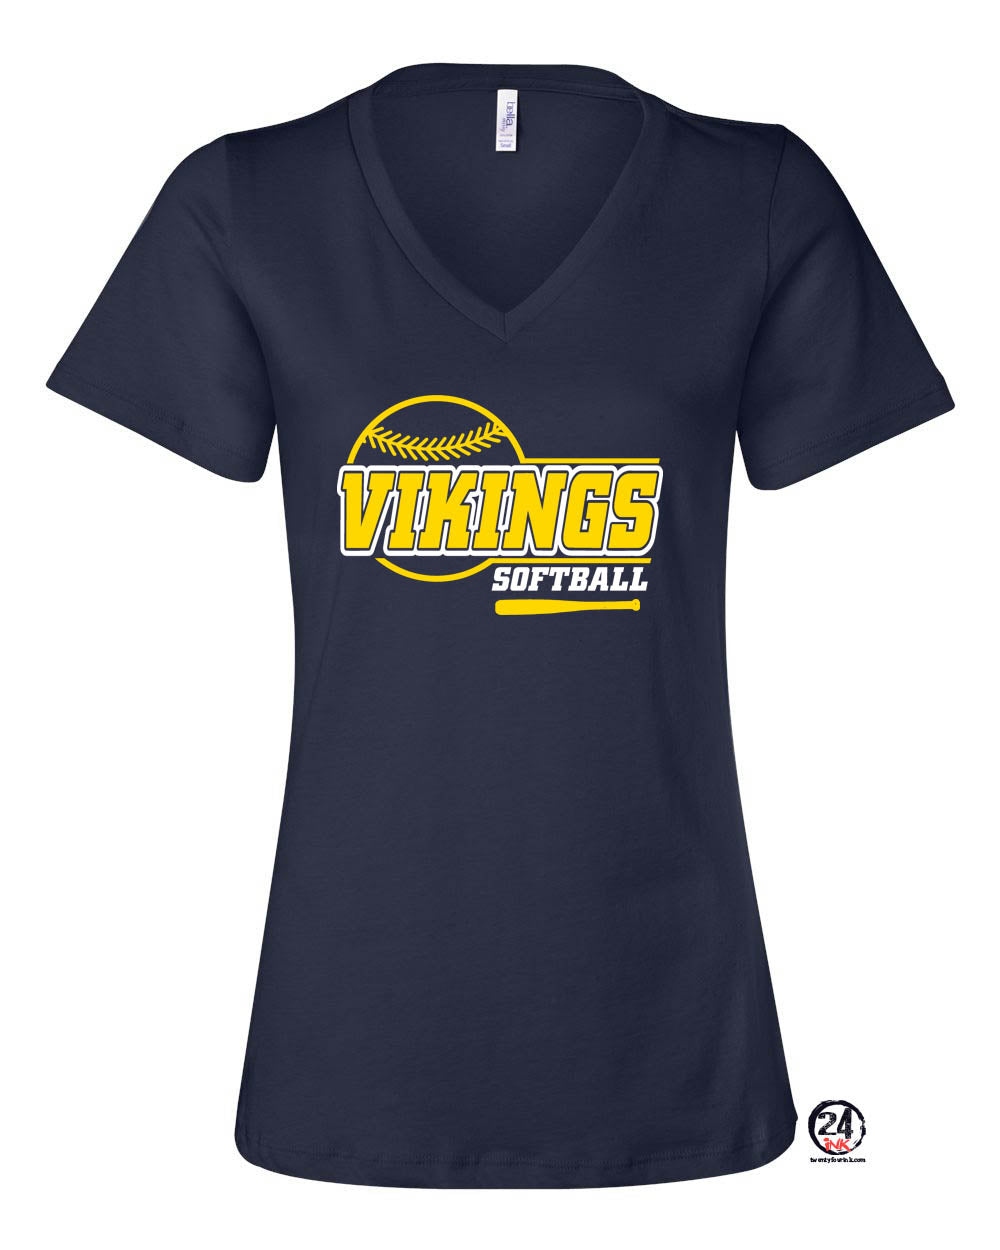 Vernon Viking Softball V-neck T-Shirt